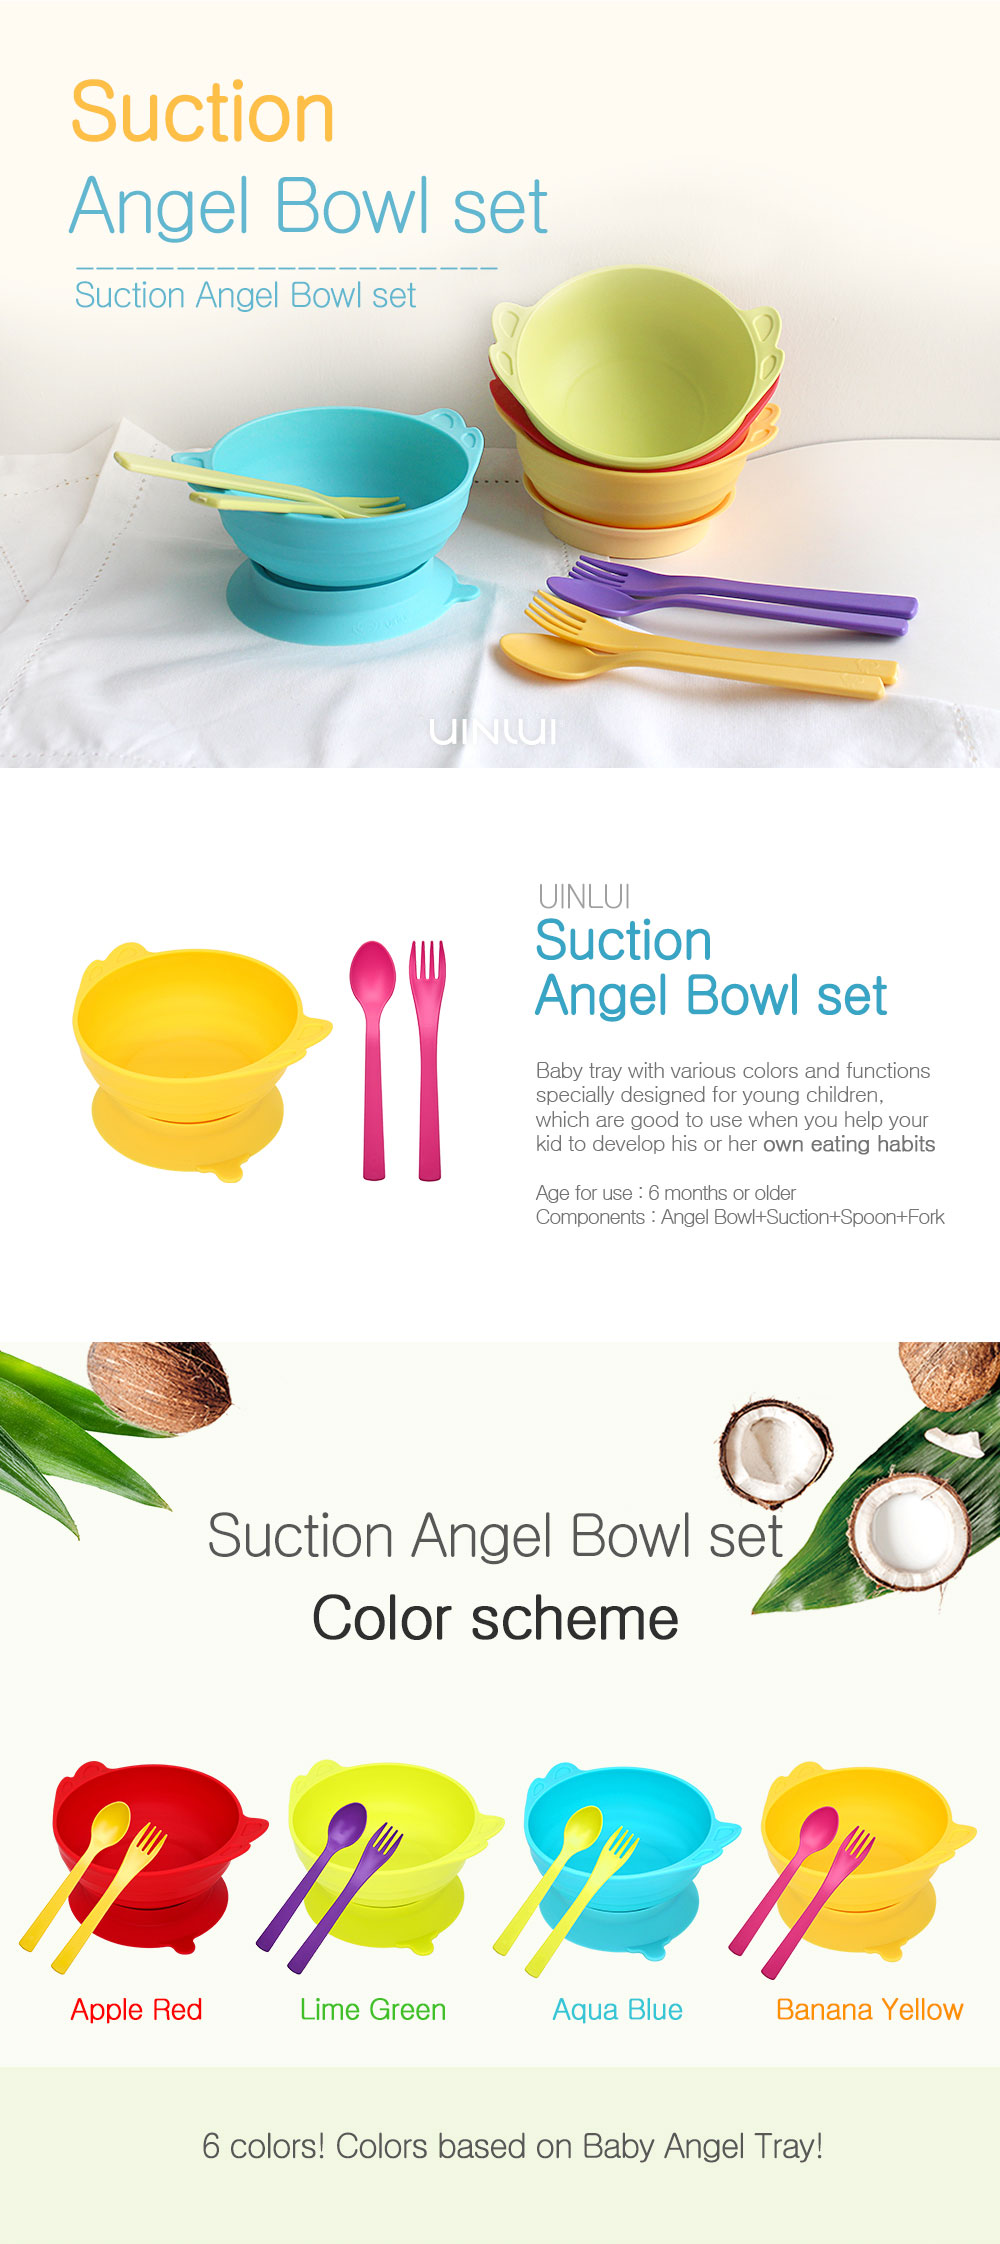 Suction Angel Bowl set